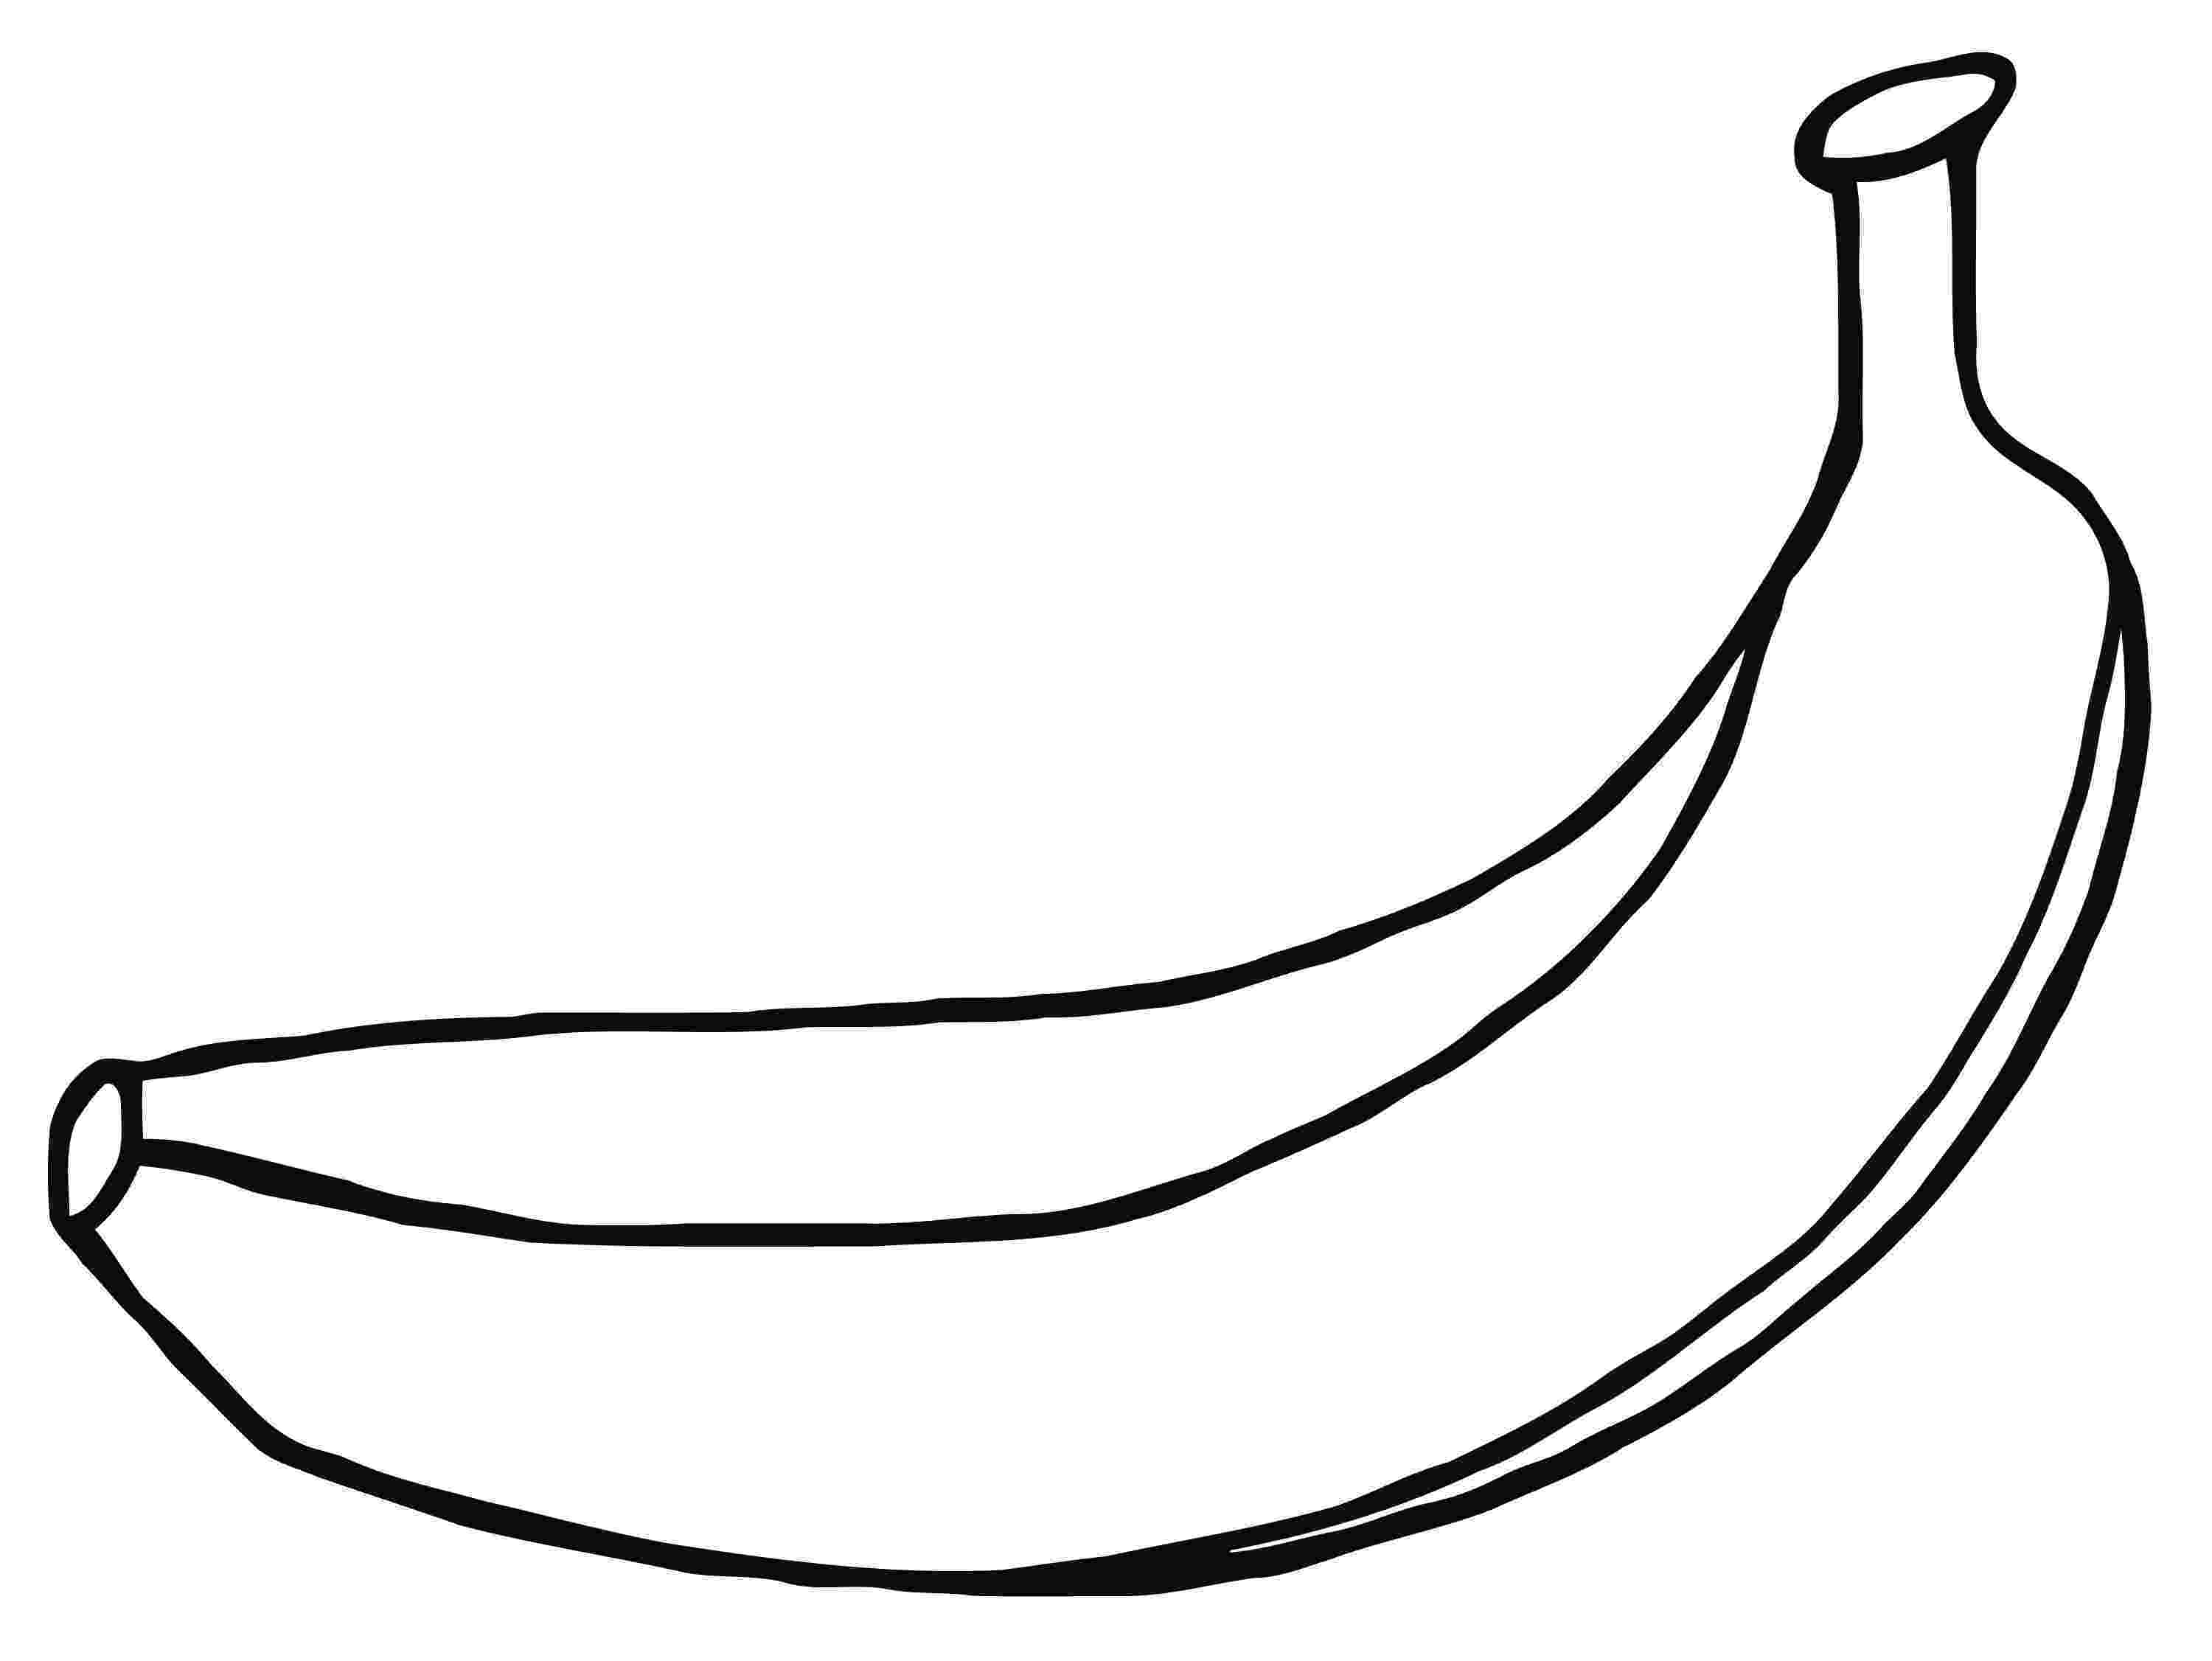 banana template do2learn educational resources for special needs banana banana template 